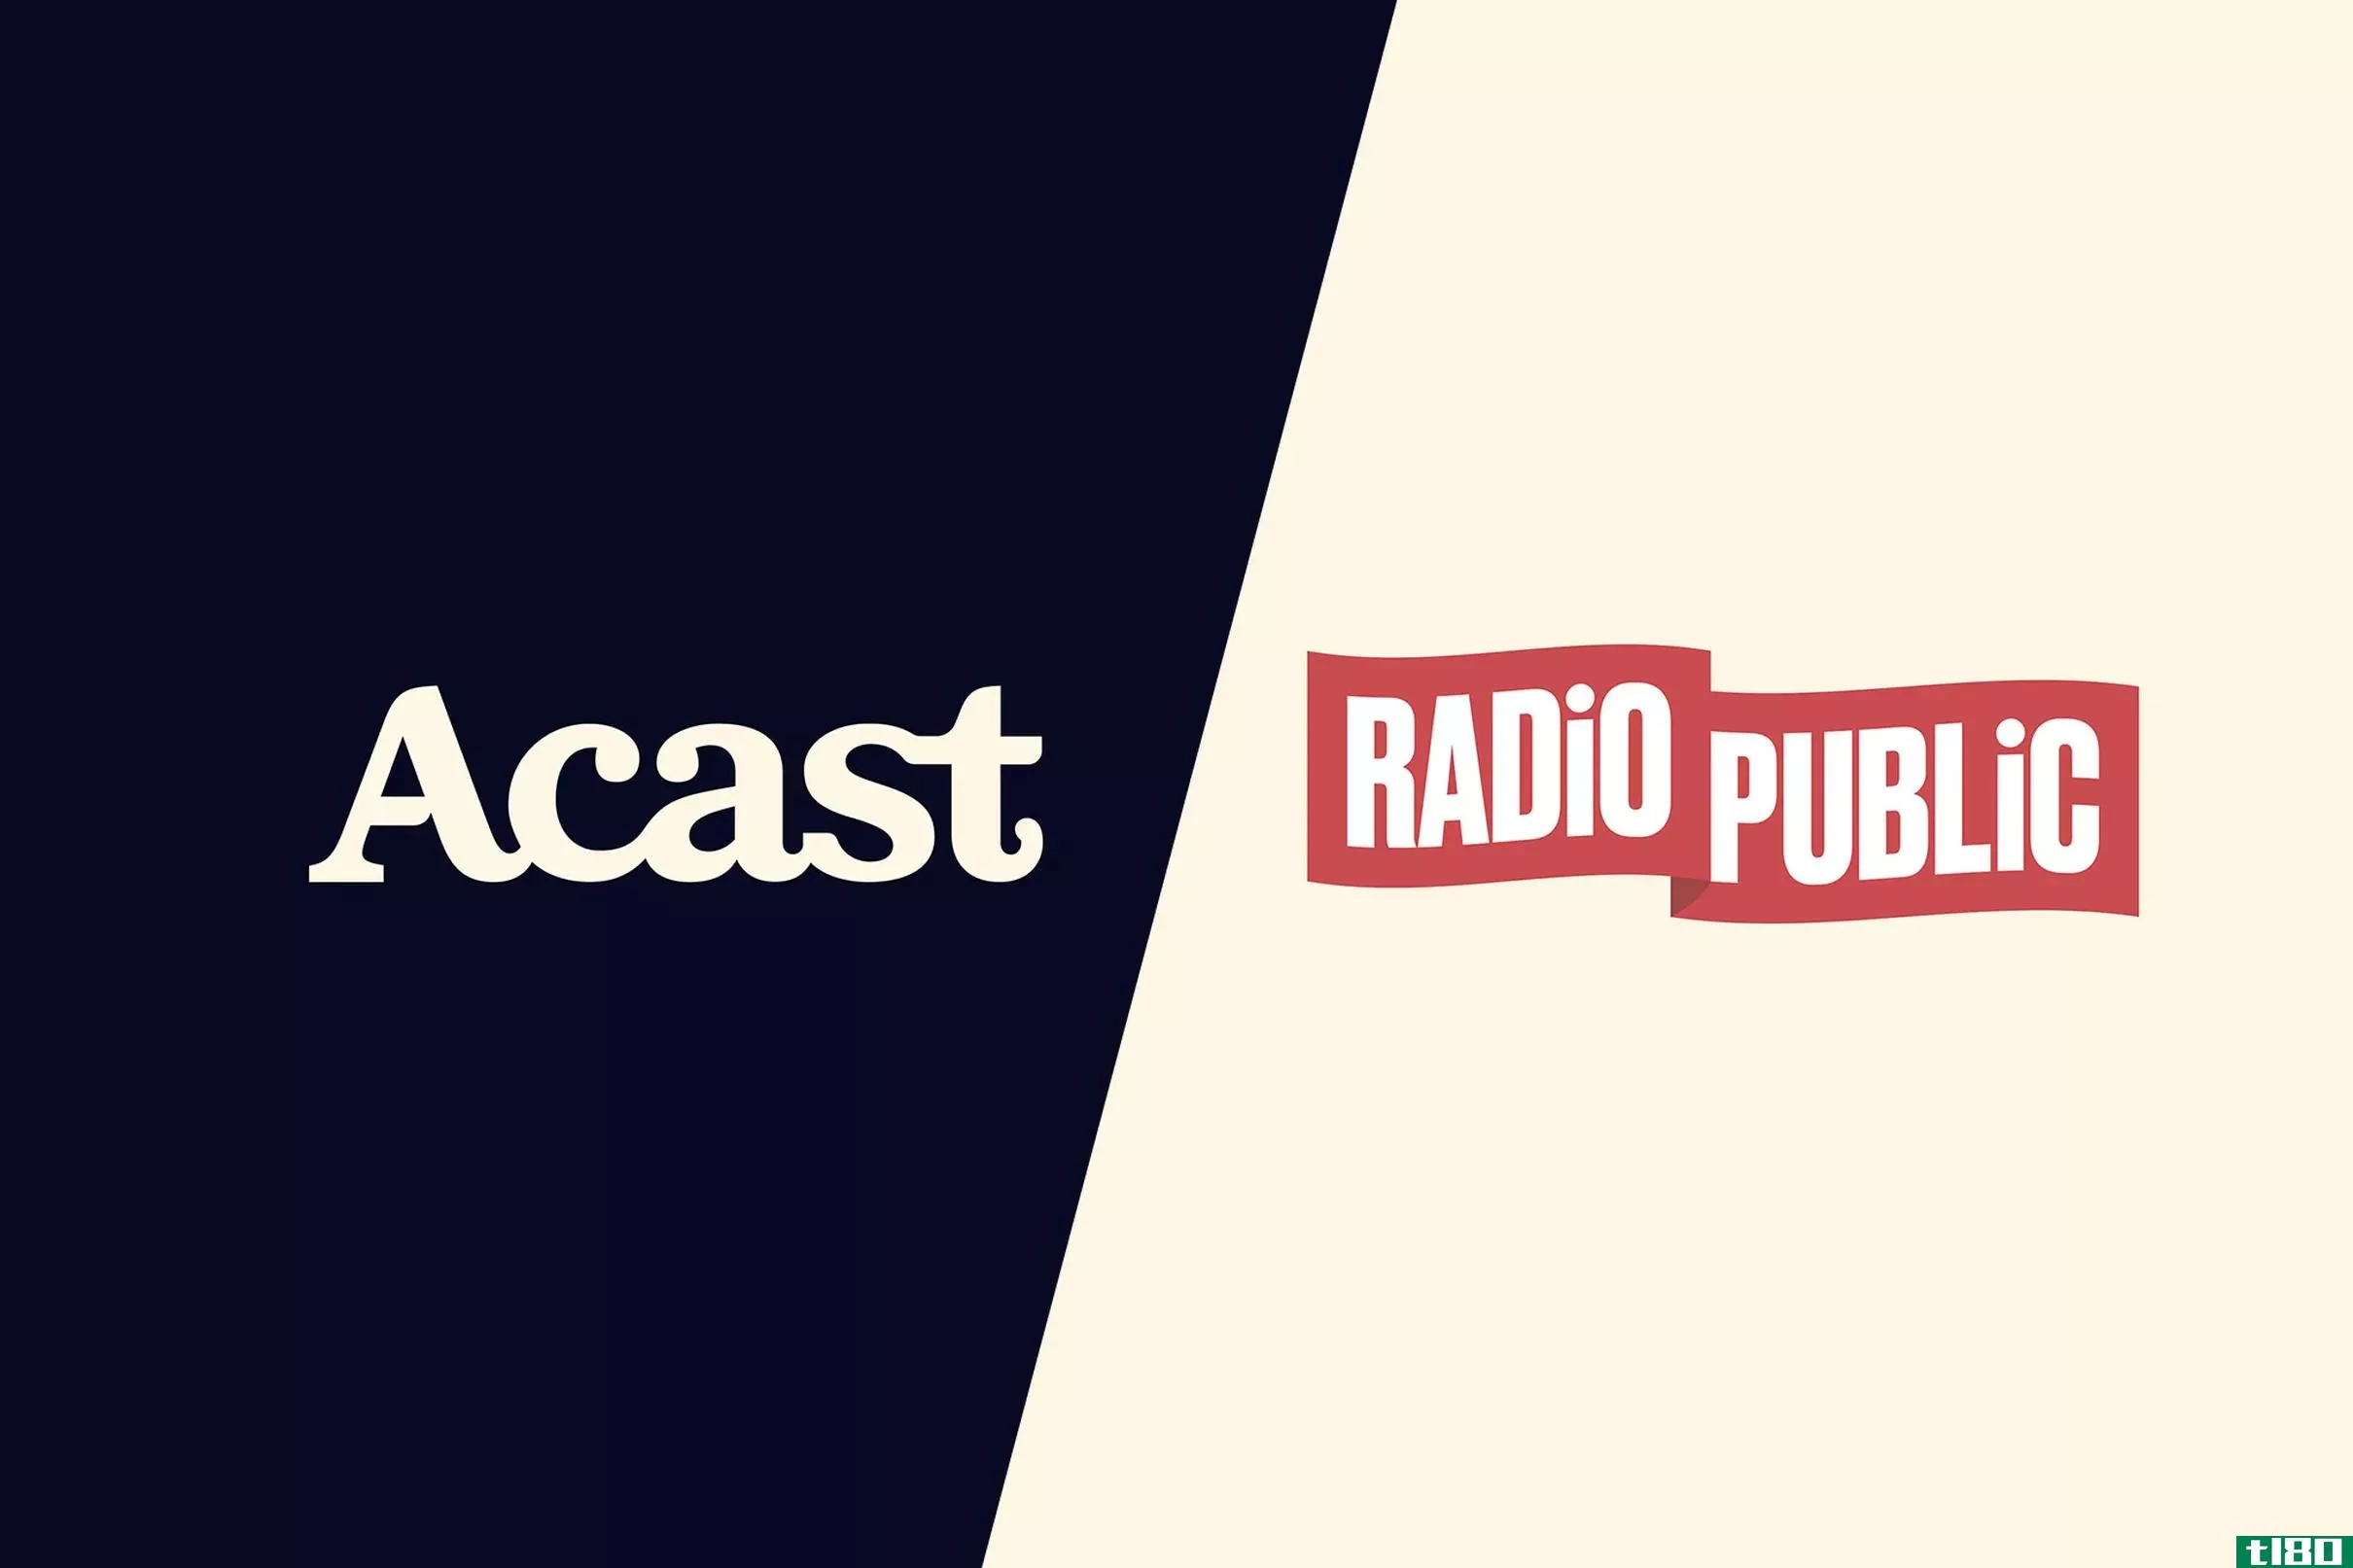 acast收购radiopublic成为美国最大的播客公司